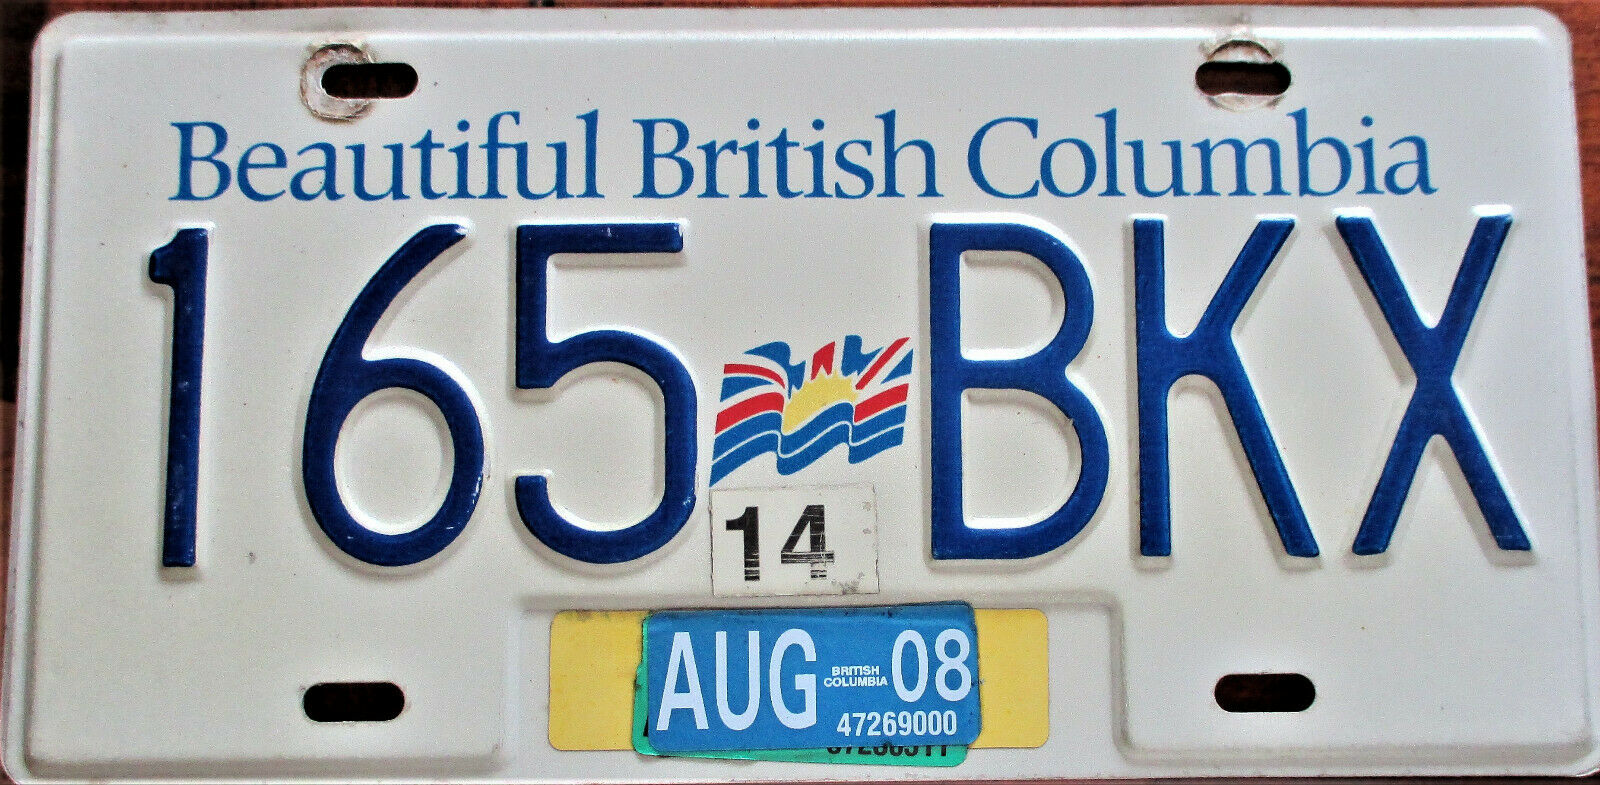 2008 British Columbia Bc Canada Flag License Plate # 165 Bkx